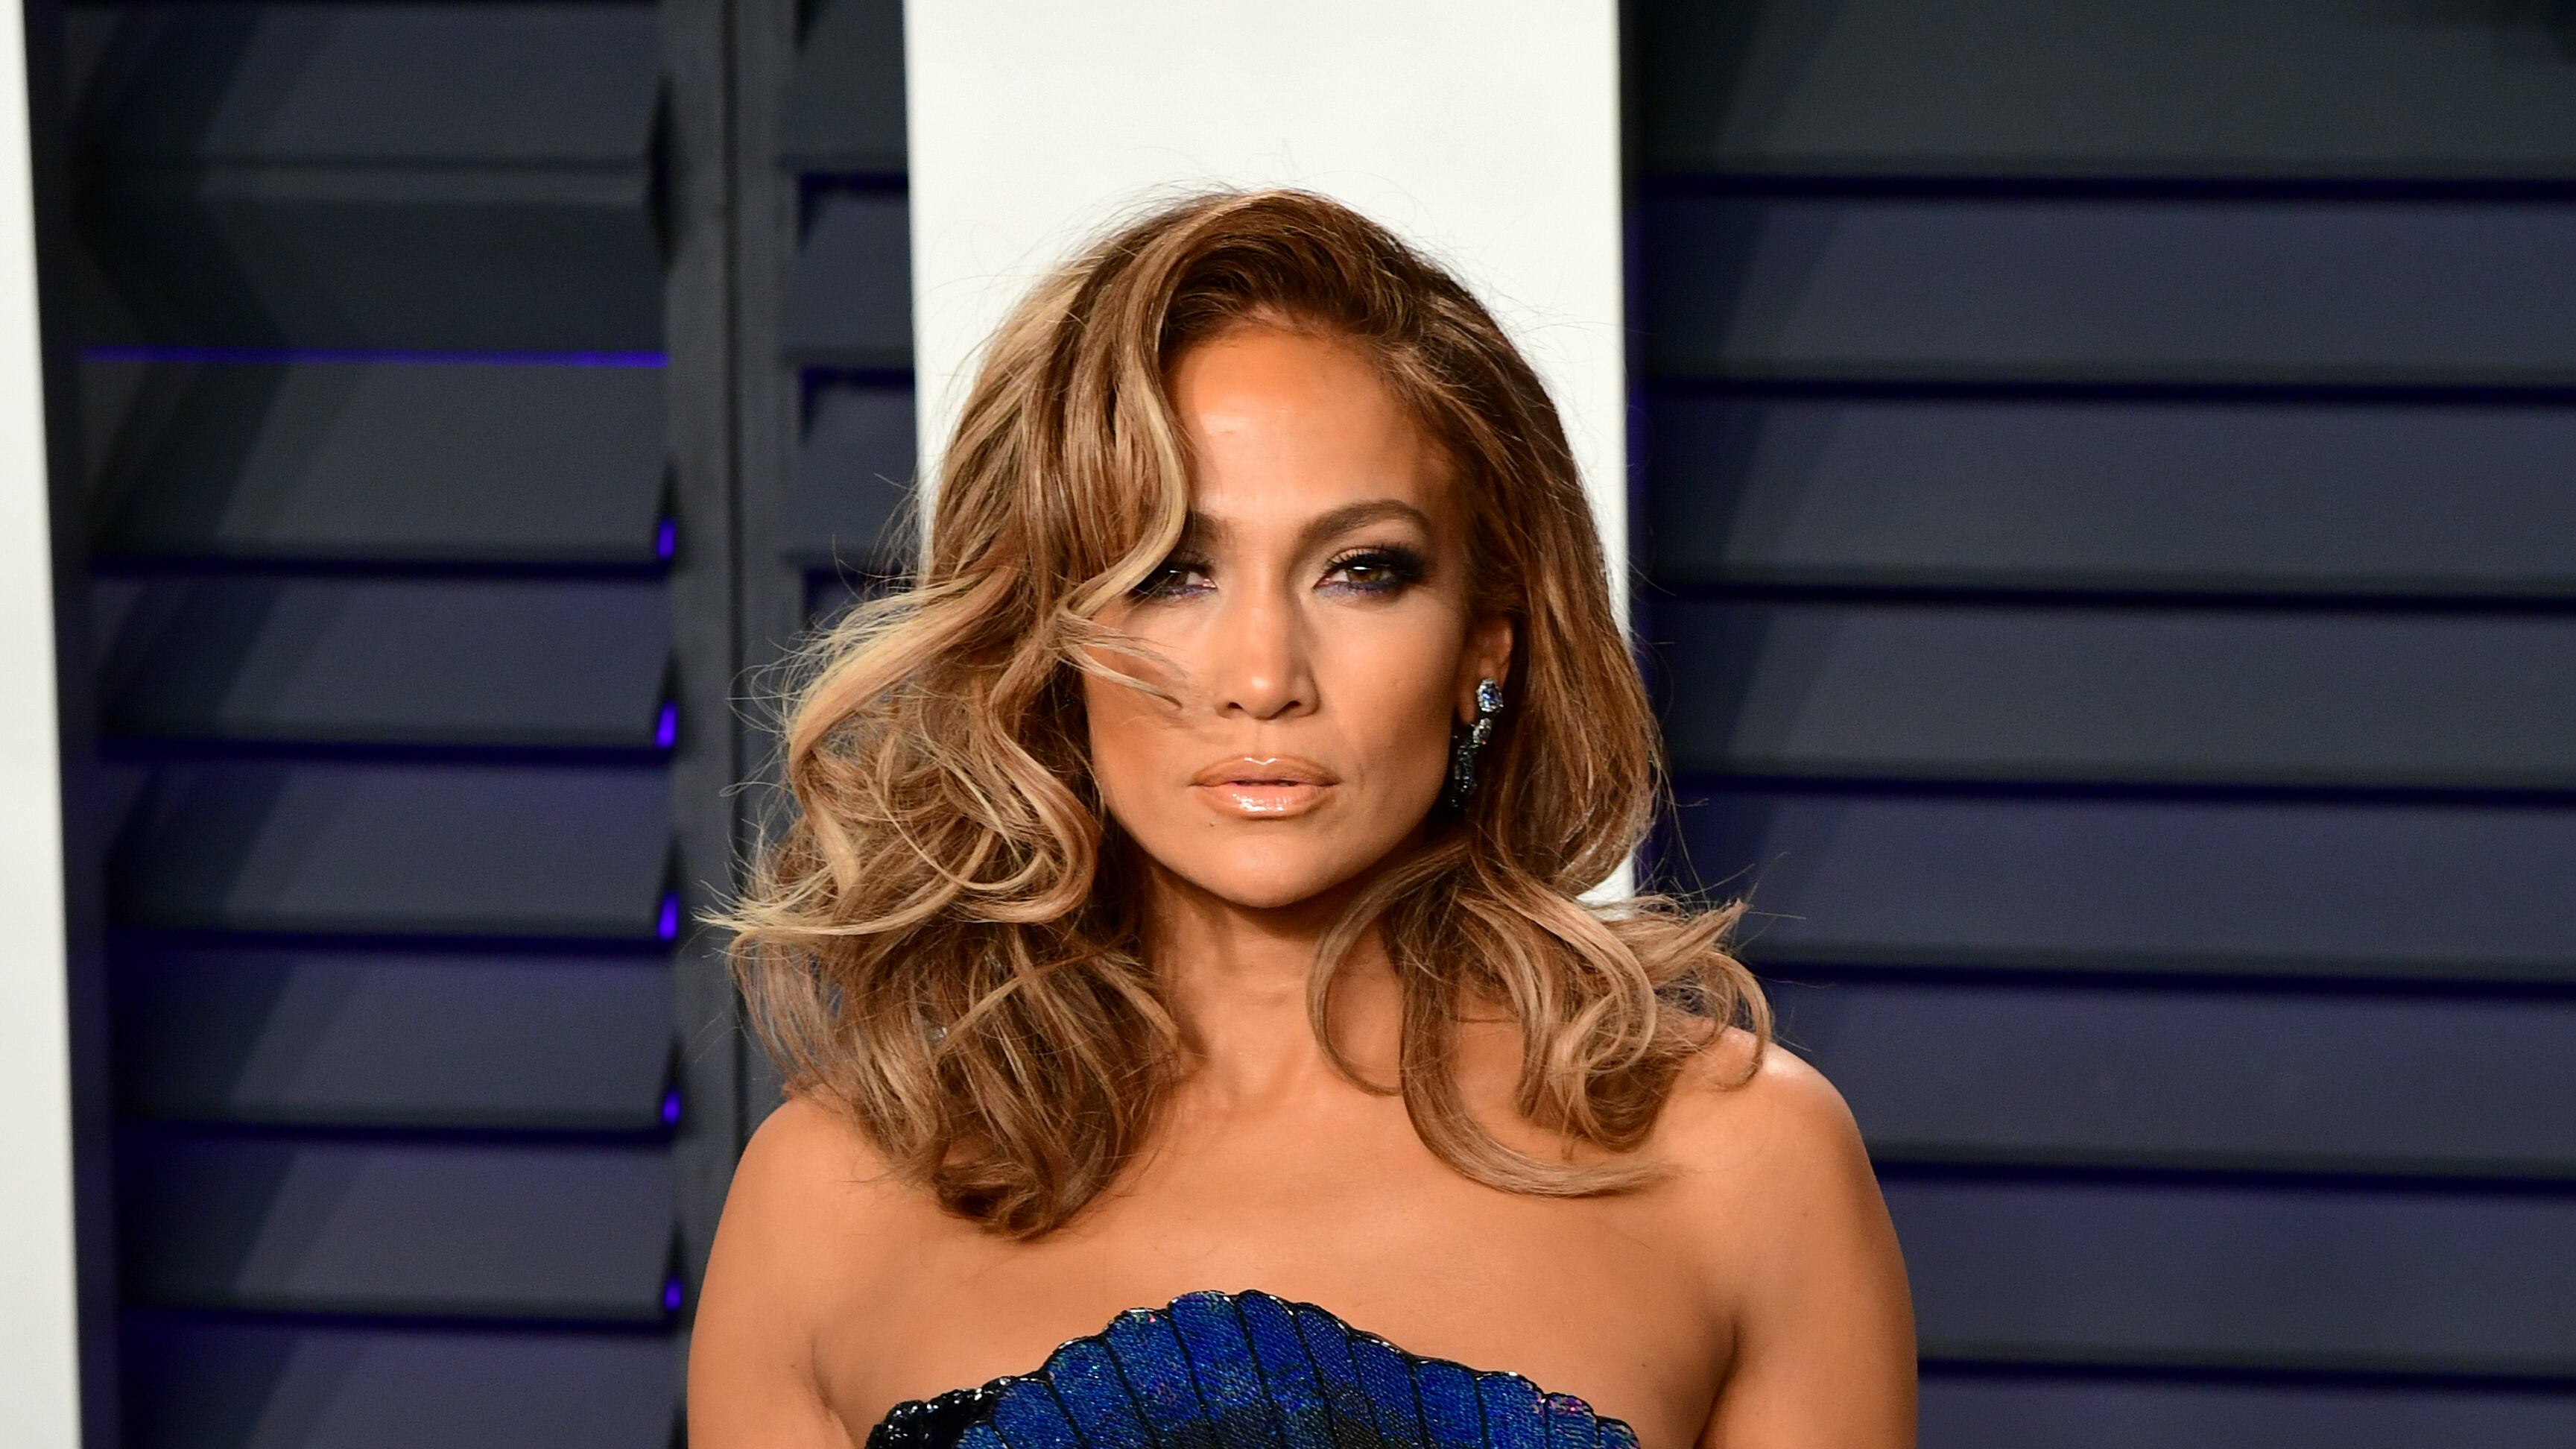 Jennifer Lopez addresses ‘negativity’ amid split rumours and tour cancellation